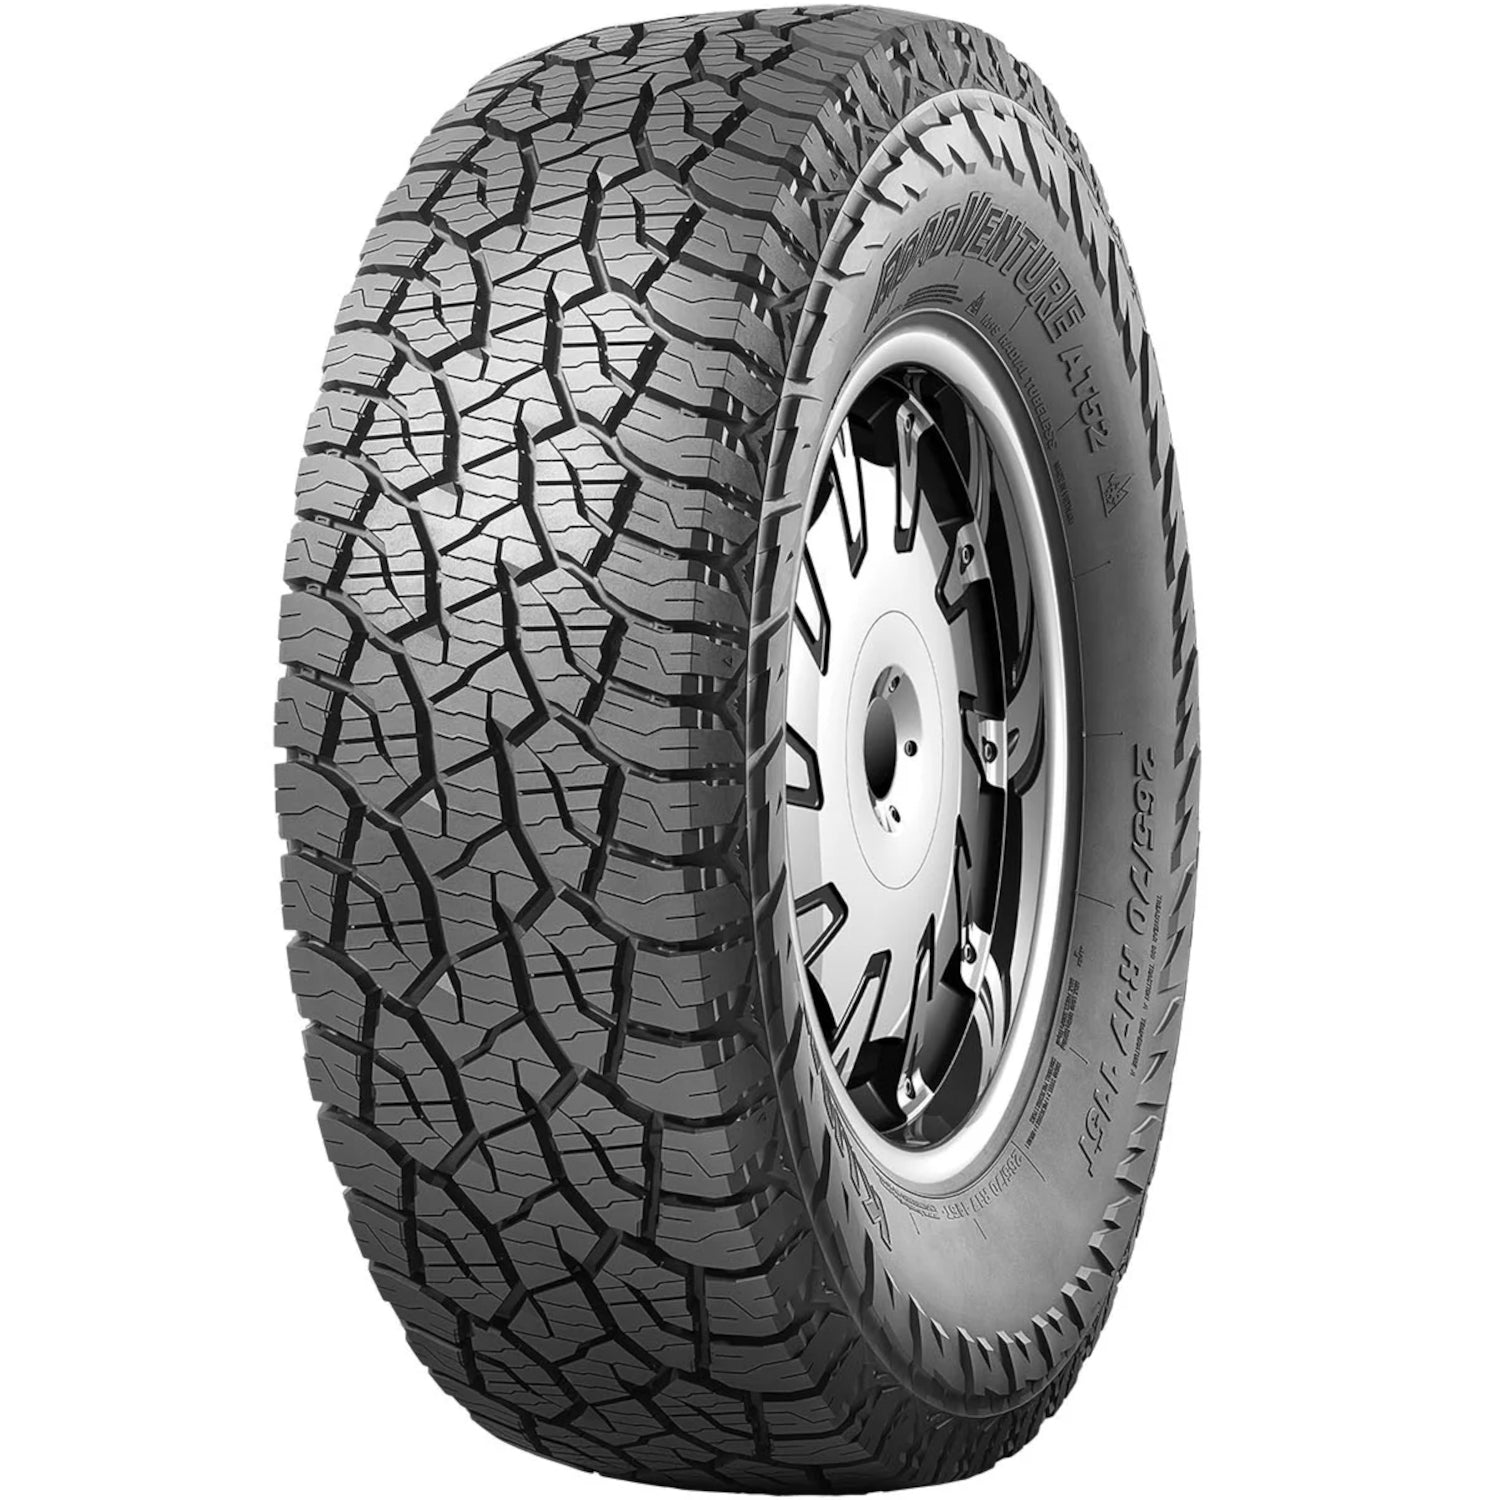 KUMHO ROAD VENTURE AT52 275/55R20 (31.9X10.8R 20) Tires